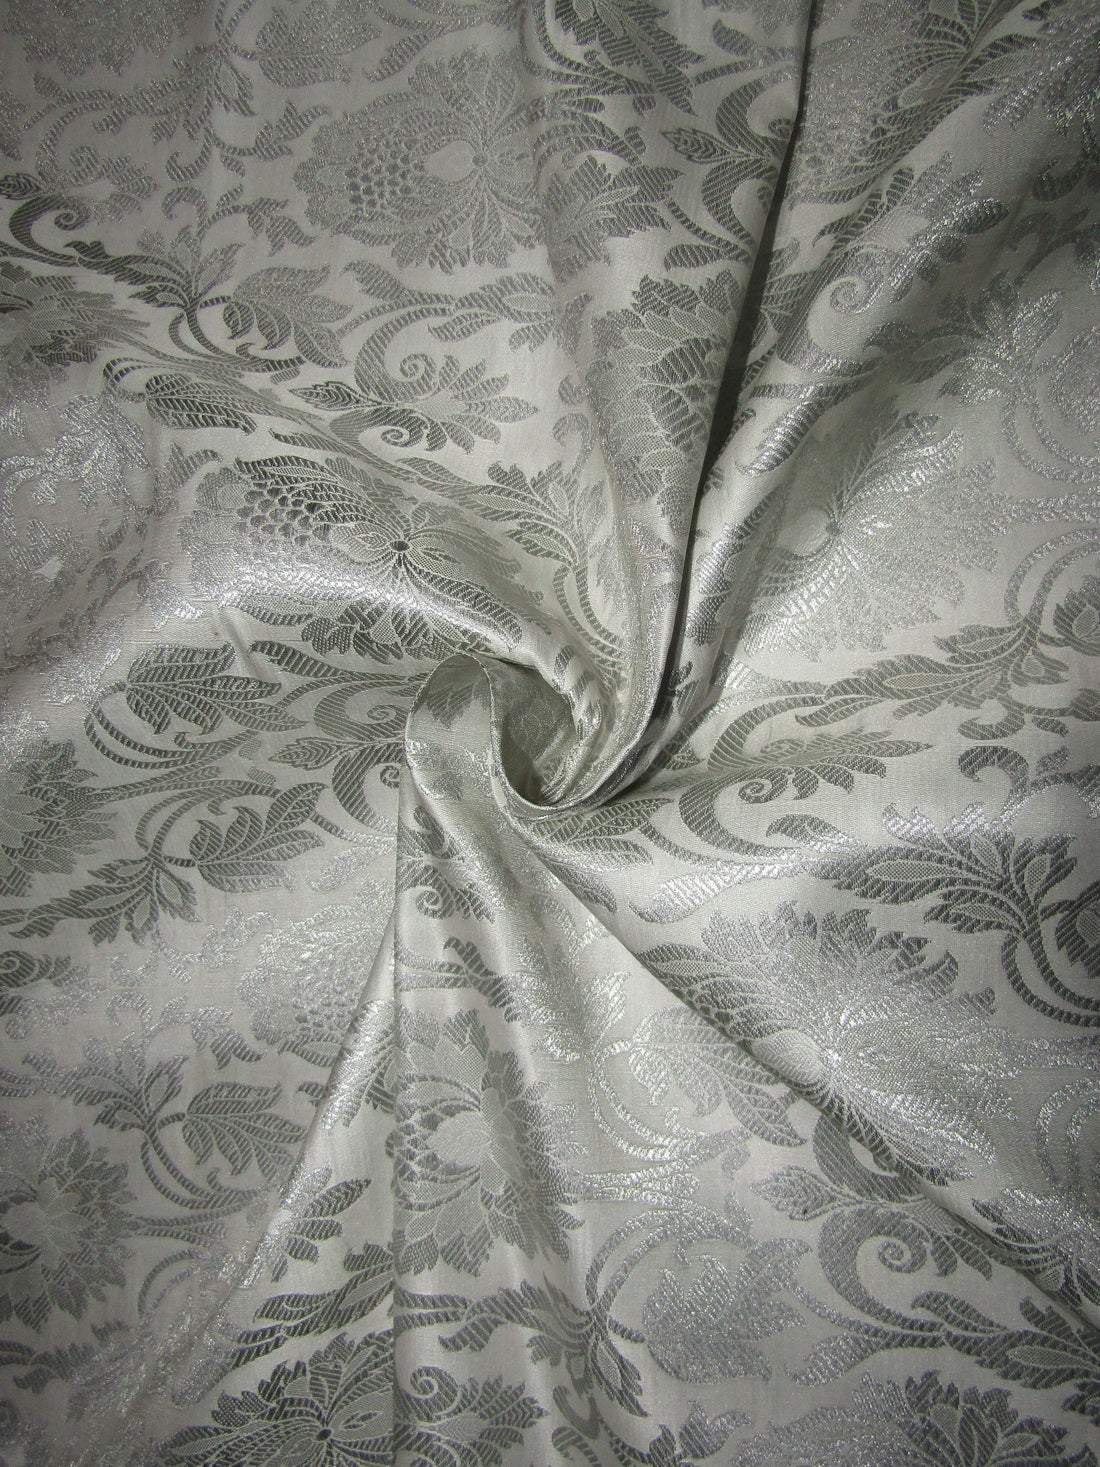 Brocade fabric white ivory x metallic silver 44" wide BRO700[5]